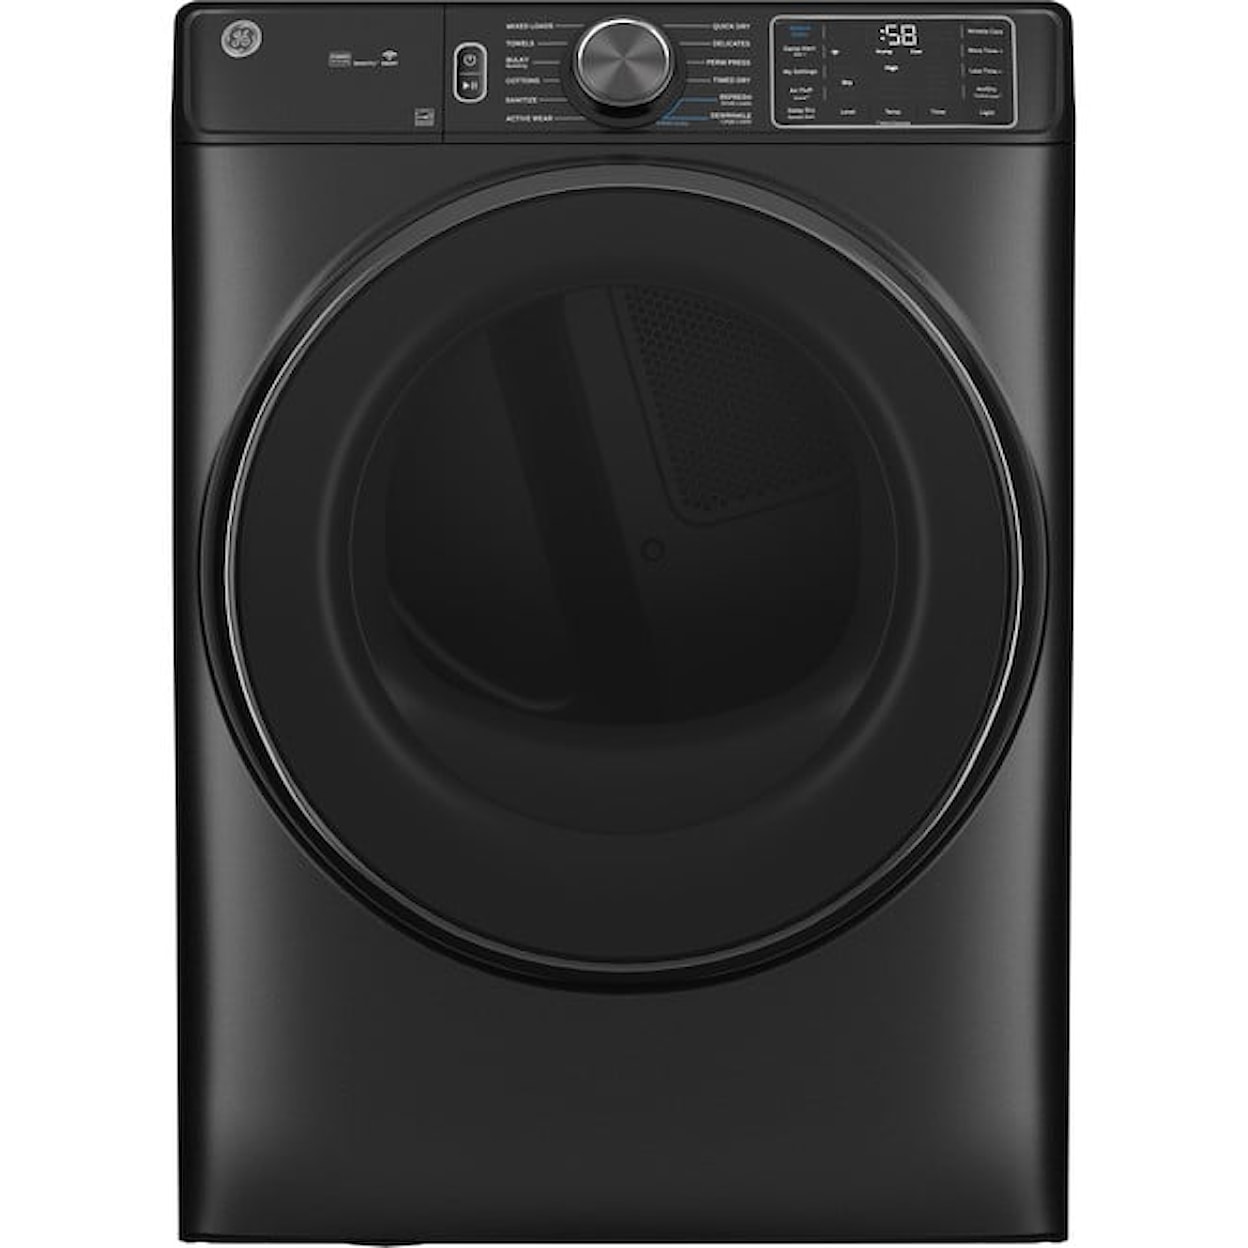 GE Appliances Laundry 7.8 cu. ft. Front Load Electric Dryer